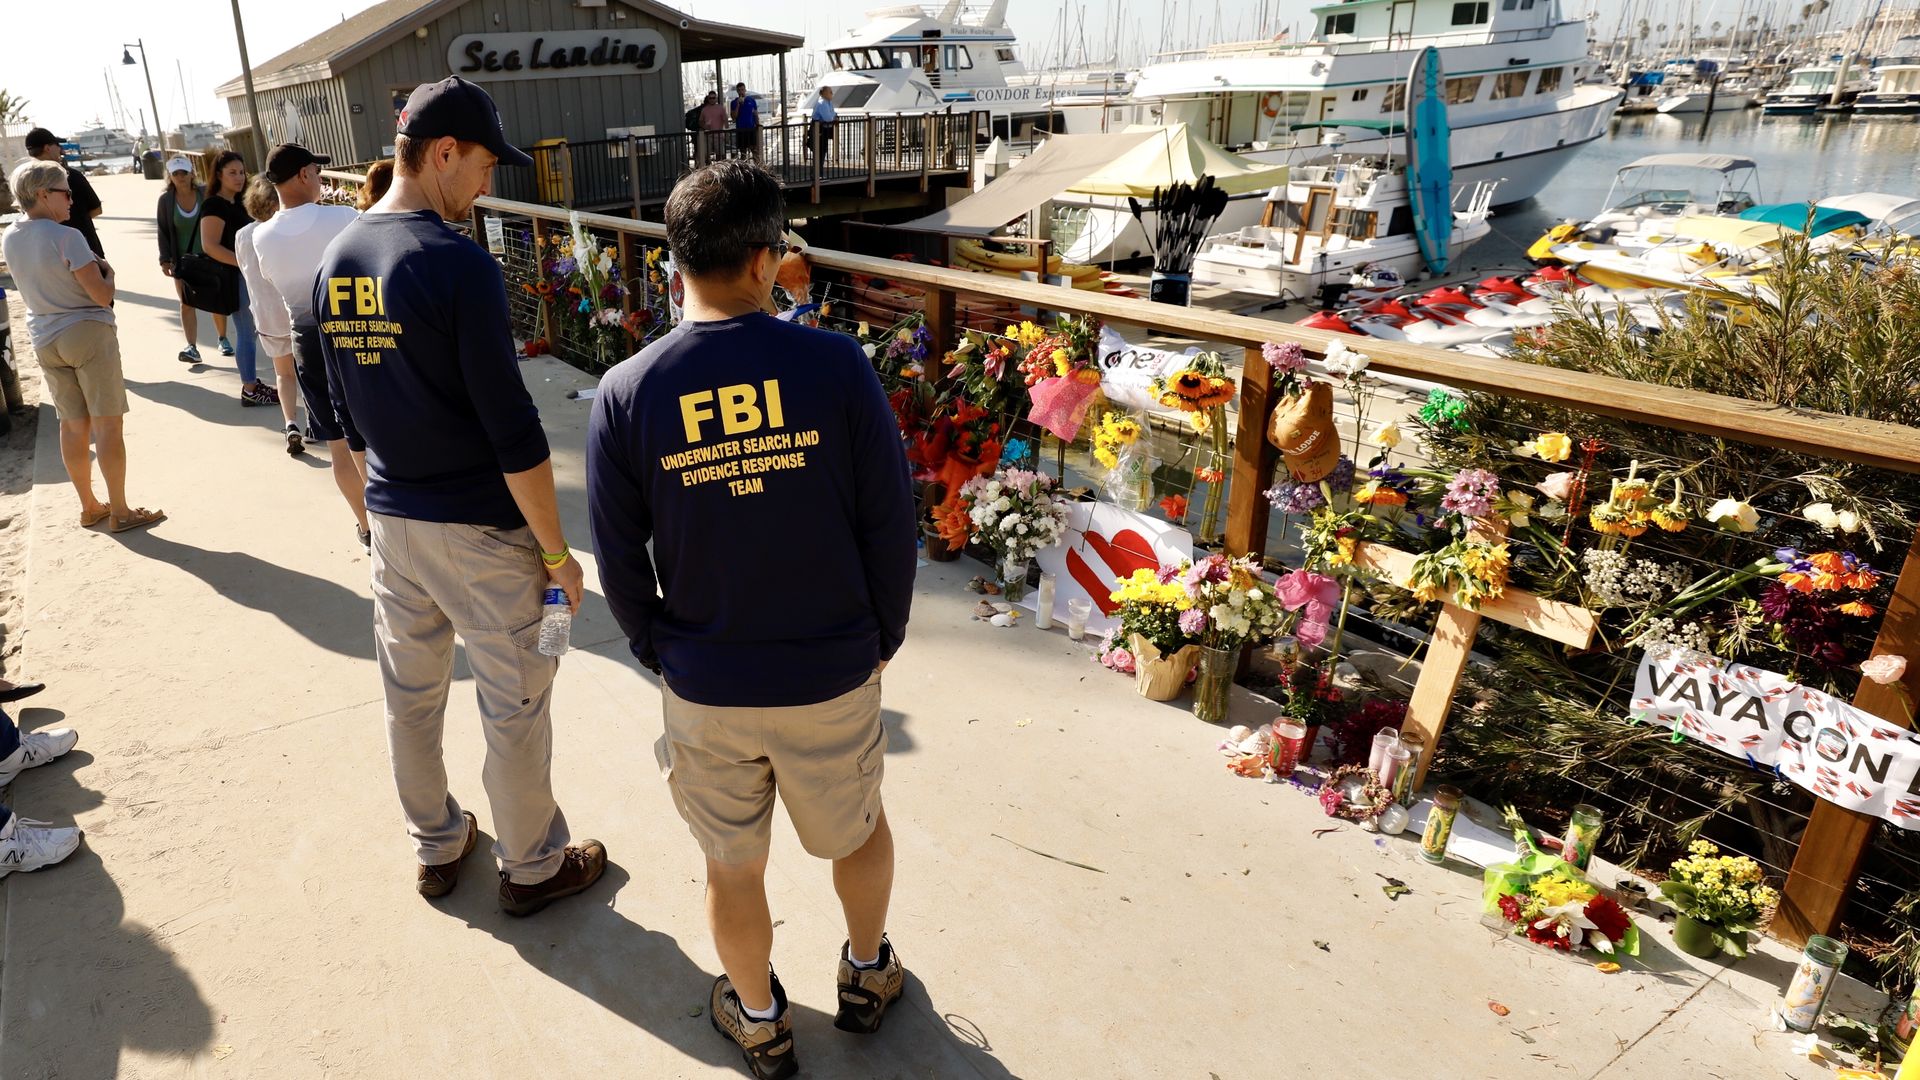 Members of the FBI dive team view a growing memorial in Santa Barbara Harbor for 34 victims of the Conception boat tragedy September 5, 2019 in Santa Barbara, California.